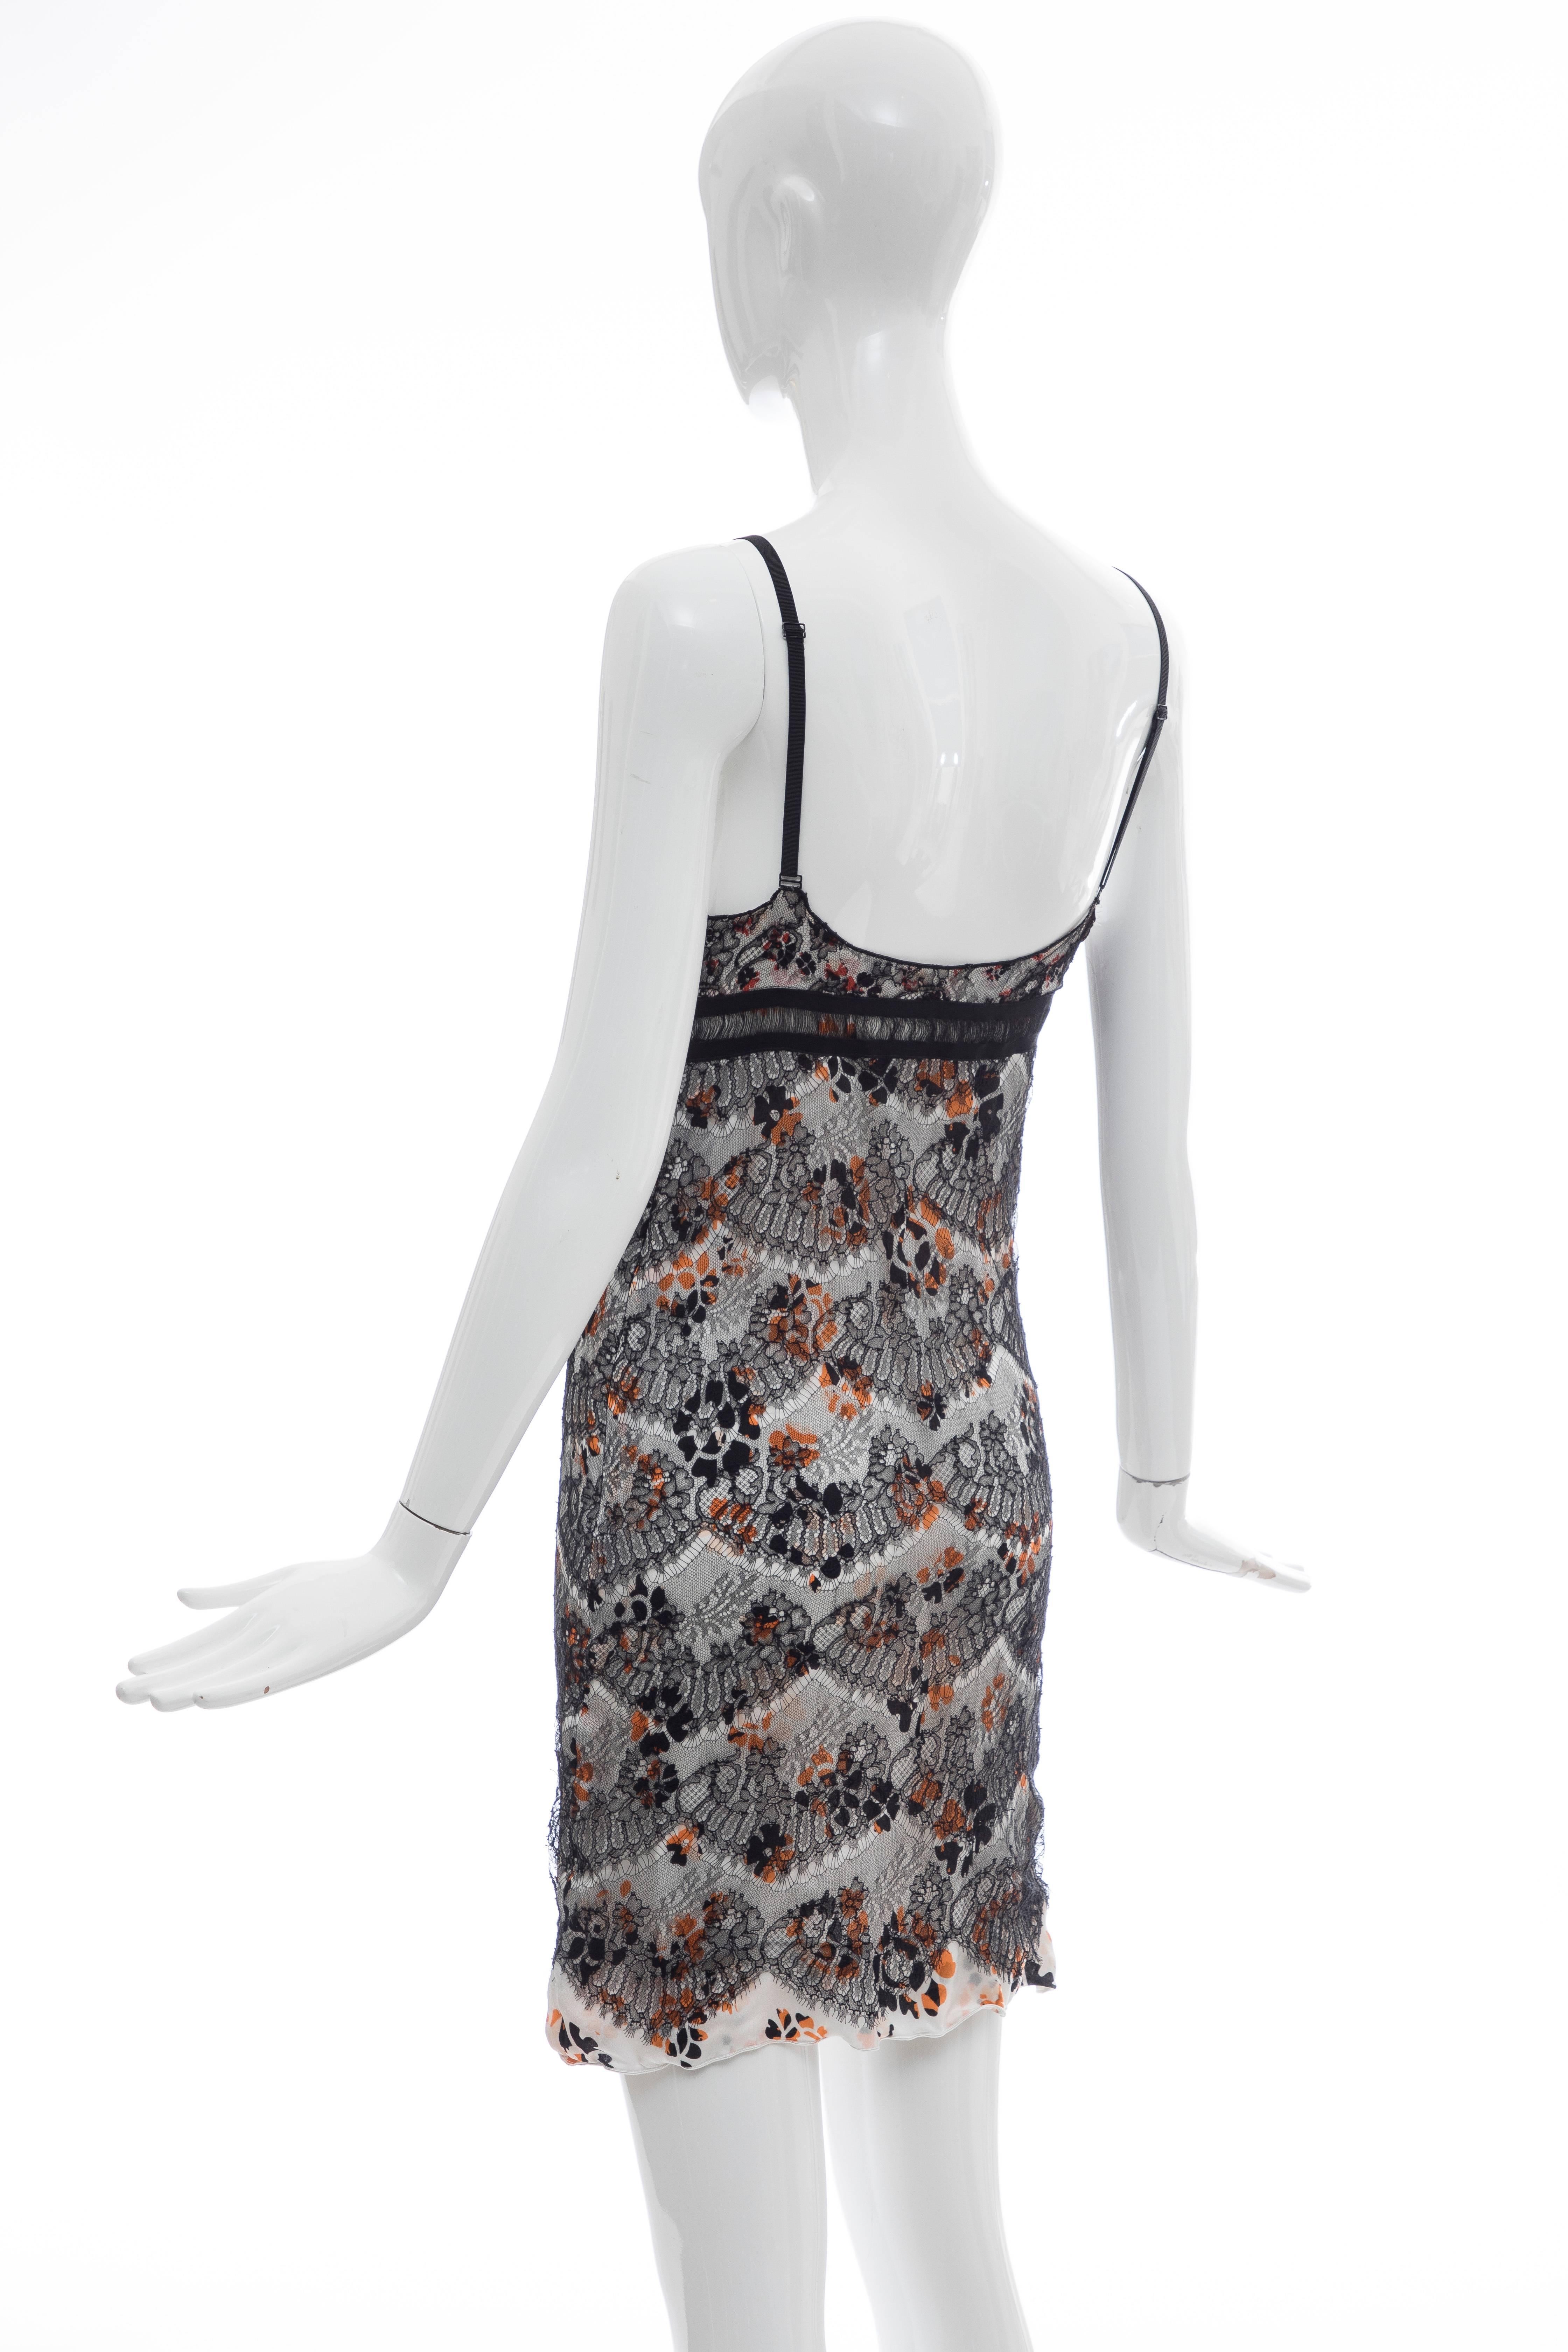 Olivier Theyskens Rochas Black Lace Overlay Floral Silk Slip Dress, Fall 2003  For Sale 2